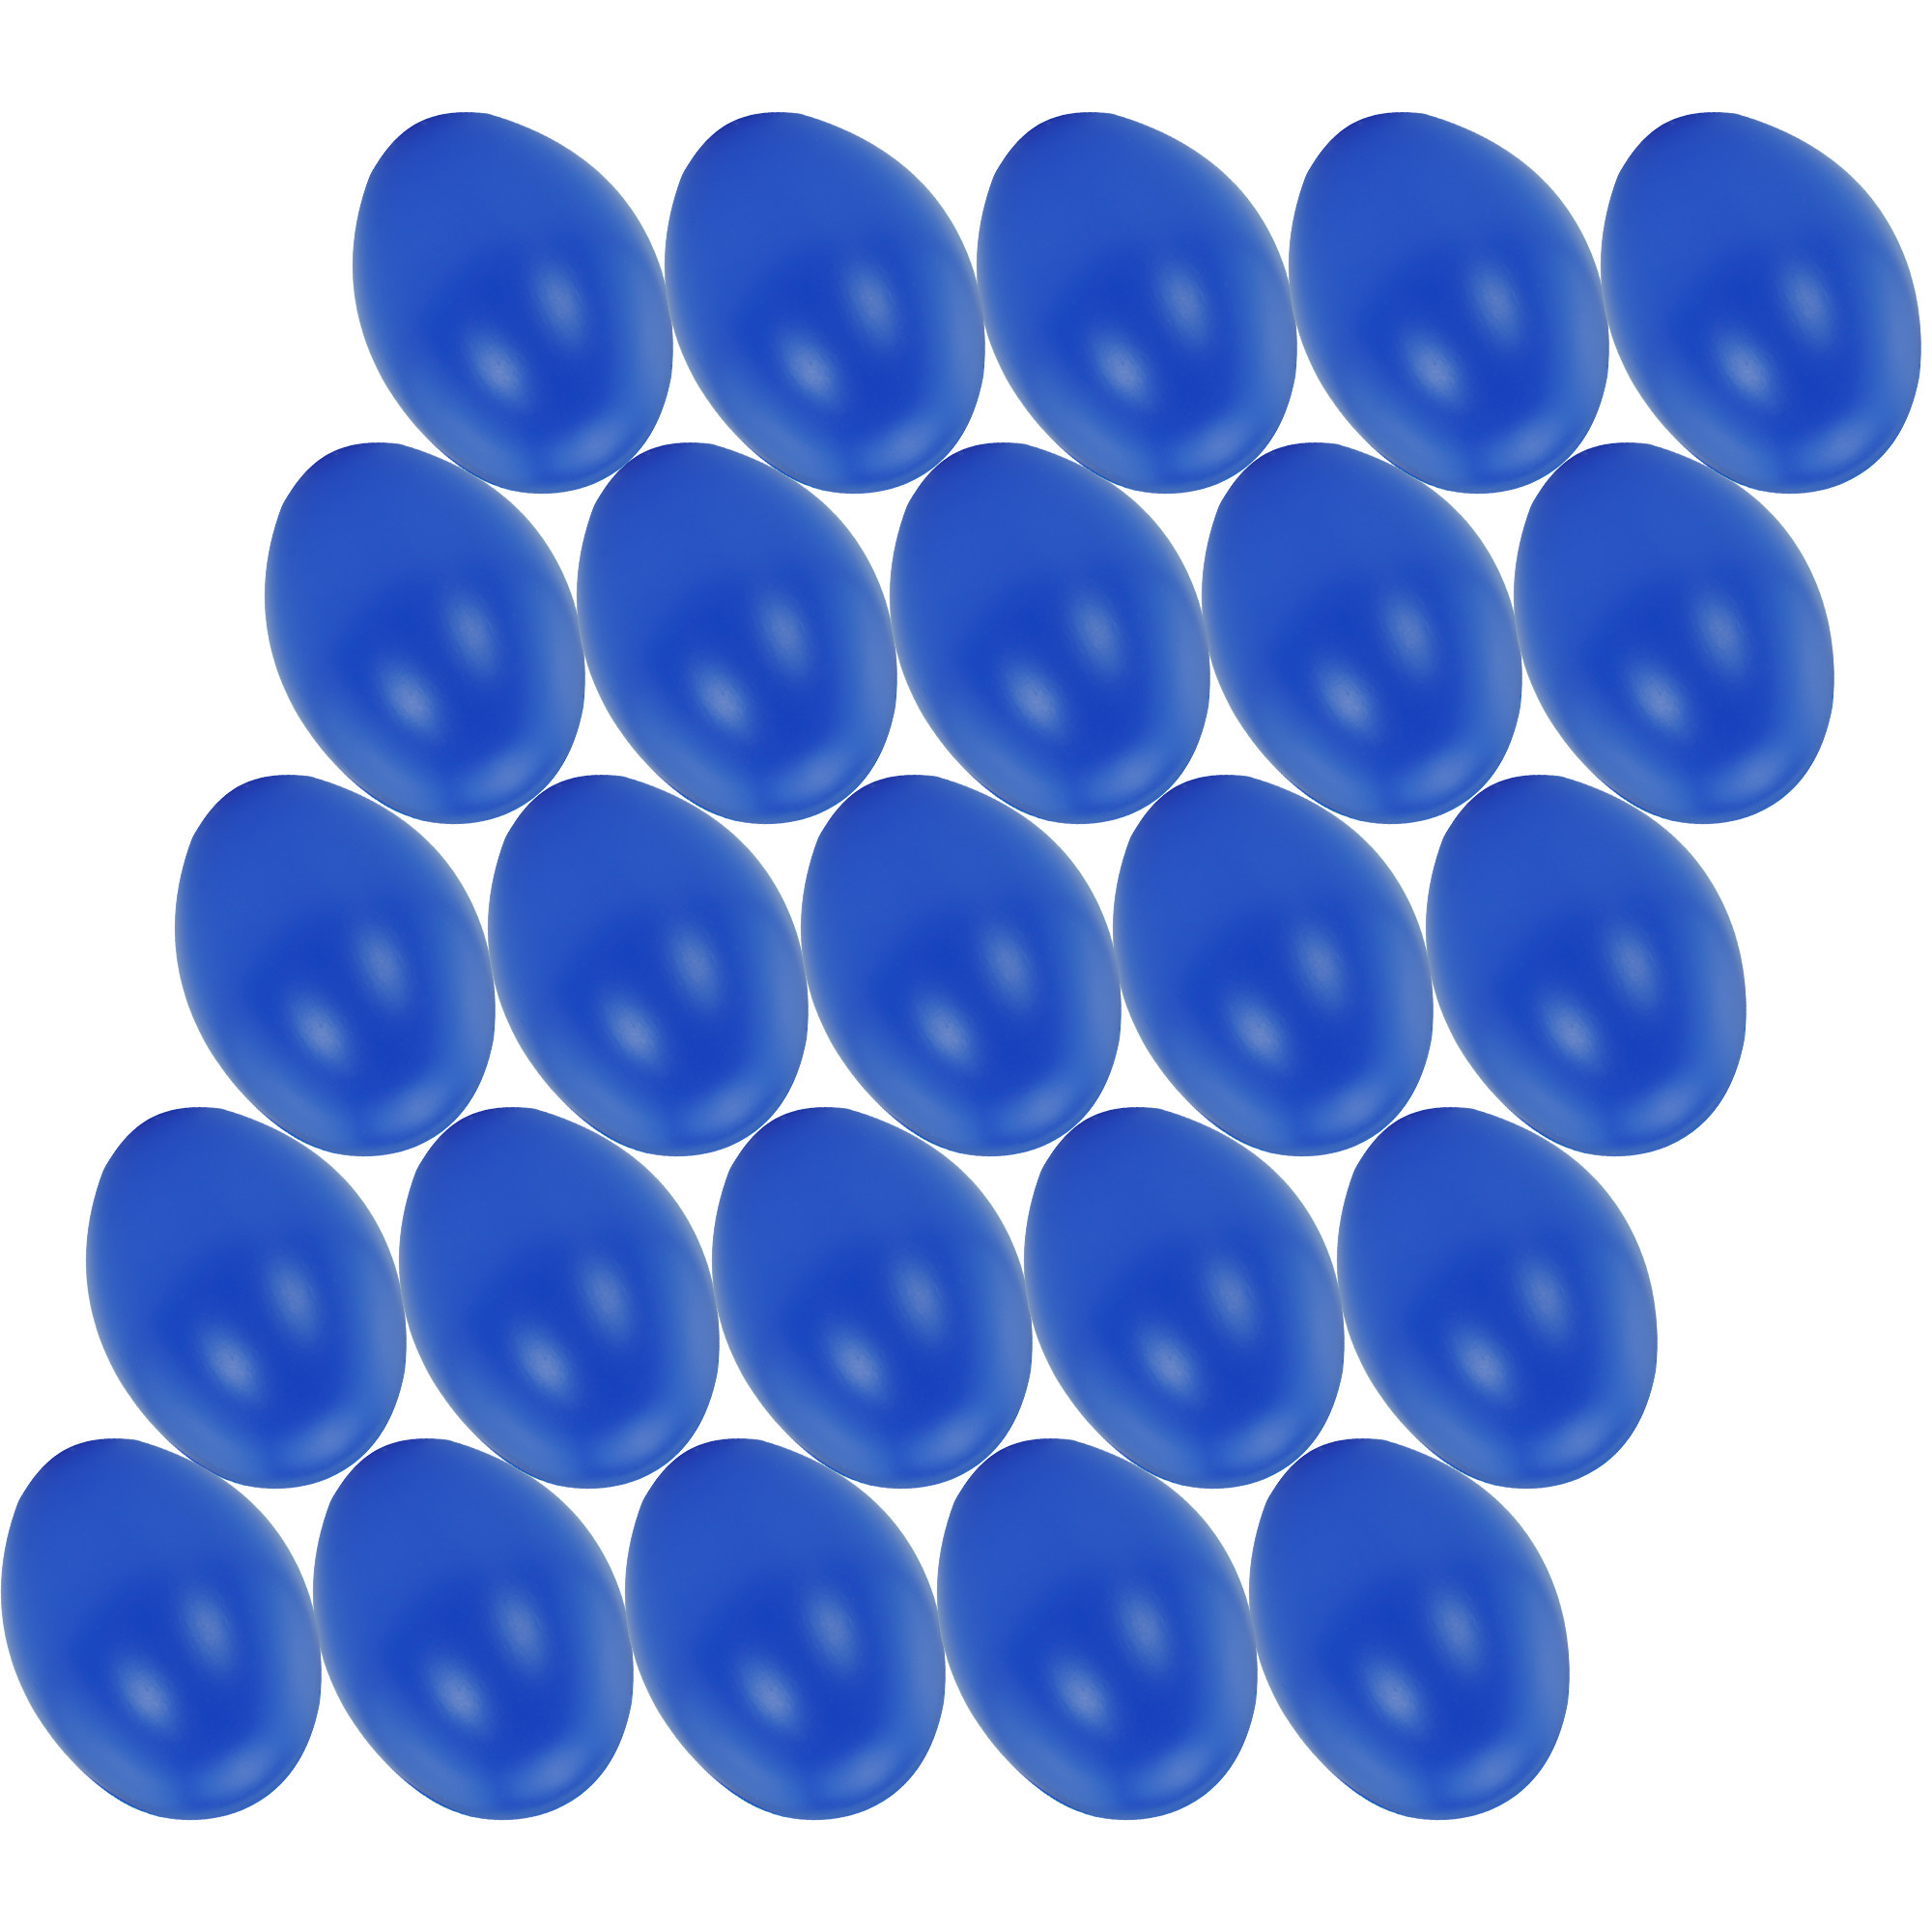 25x stuks donkerblauw hobby knutselen eieren van plastic 4.5 cm